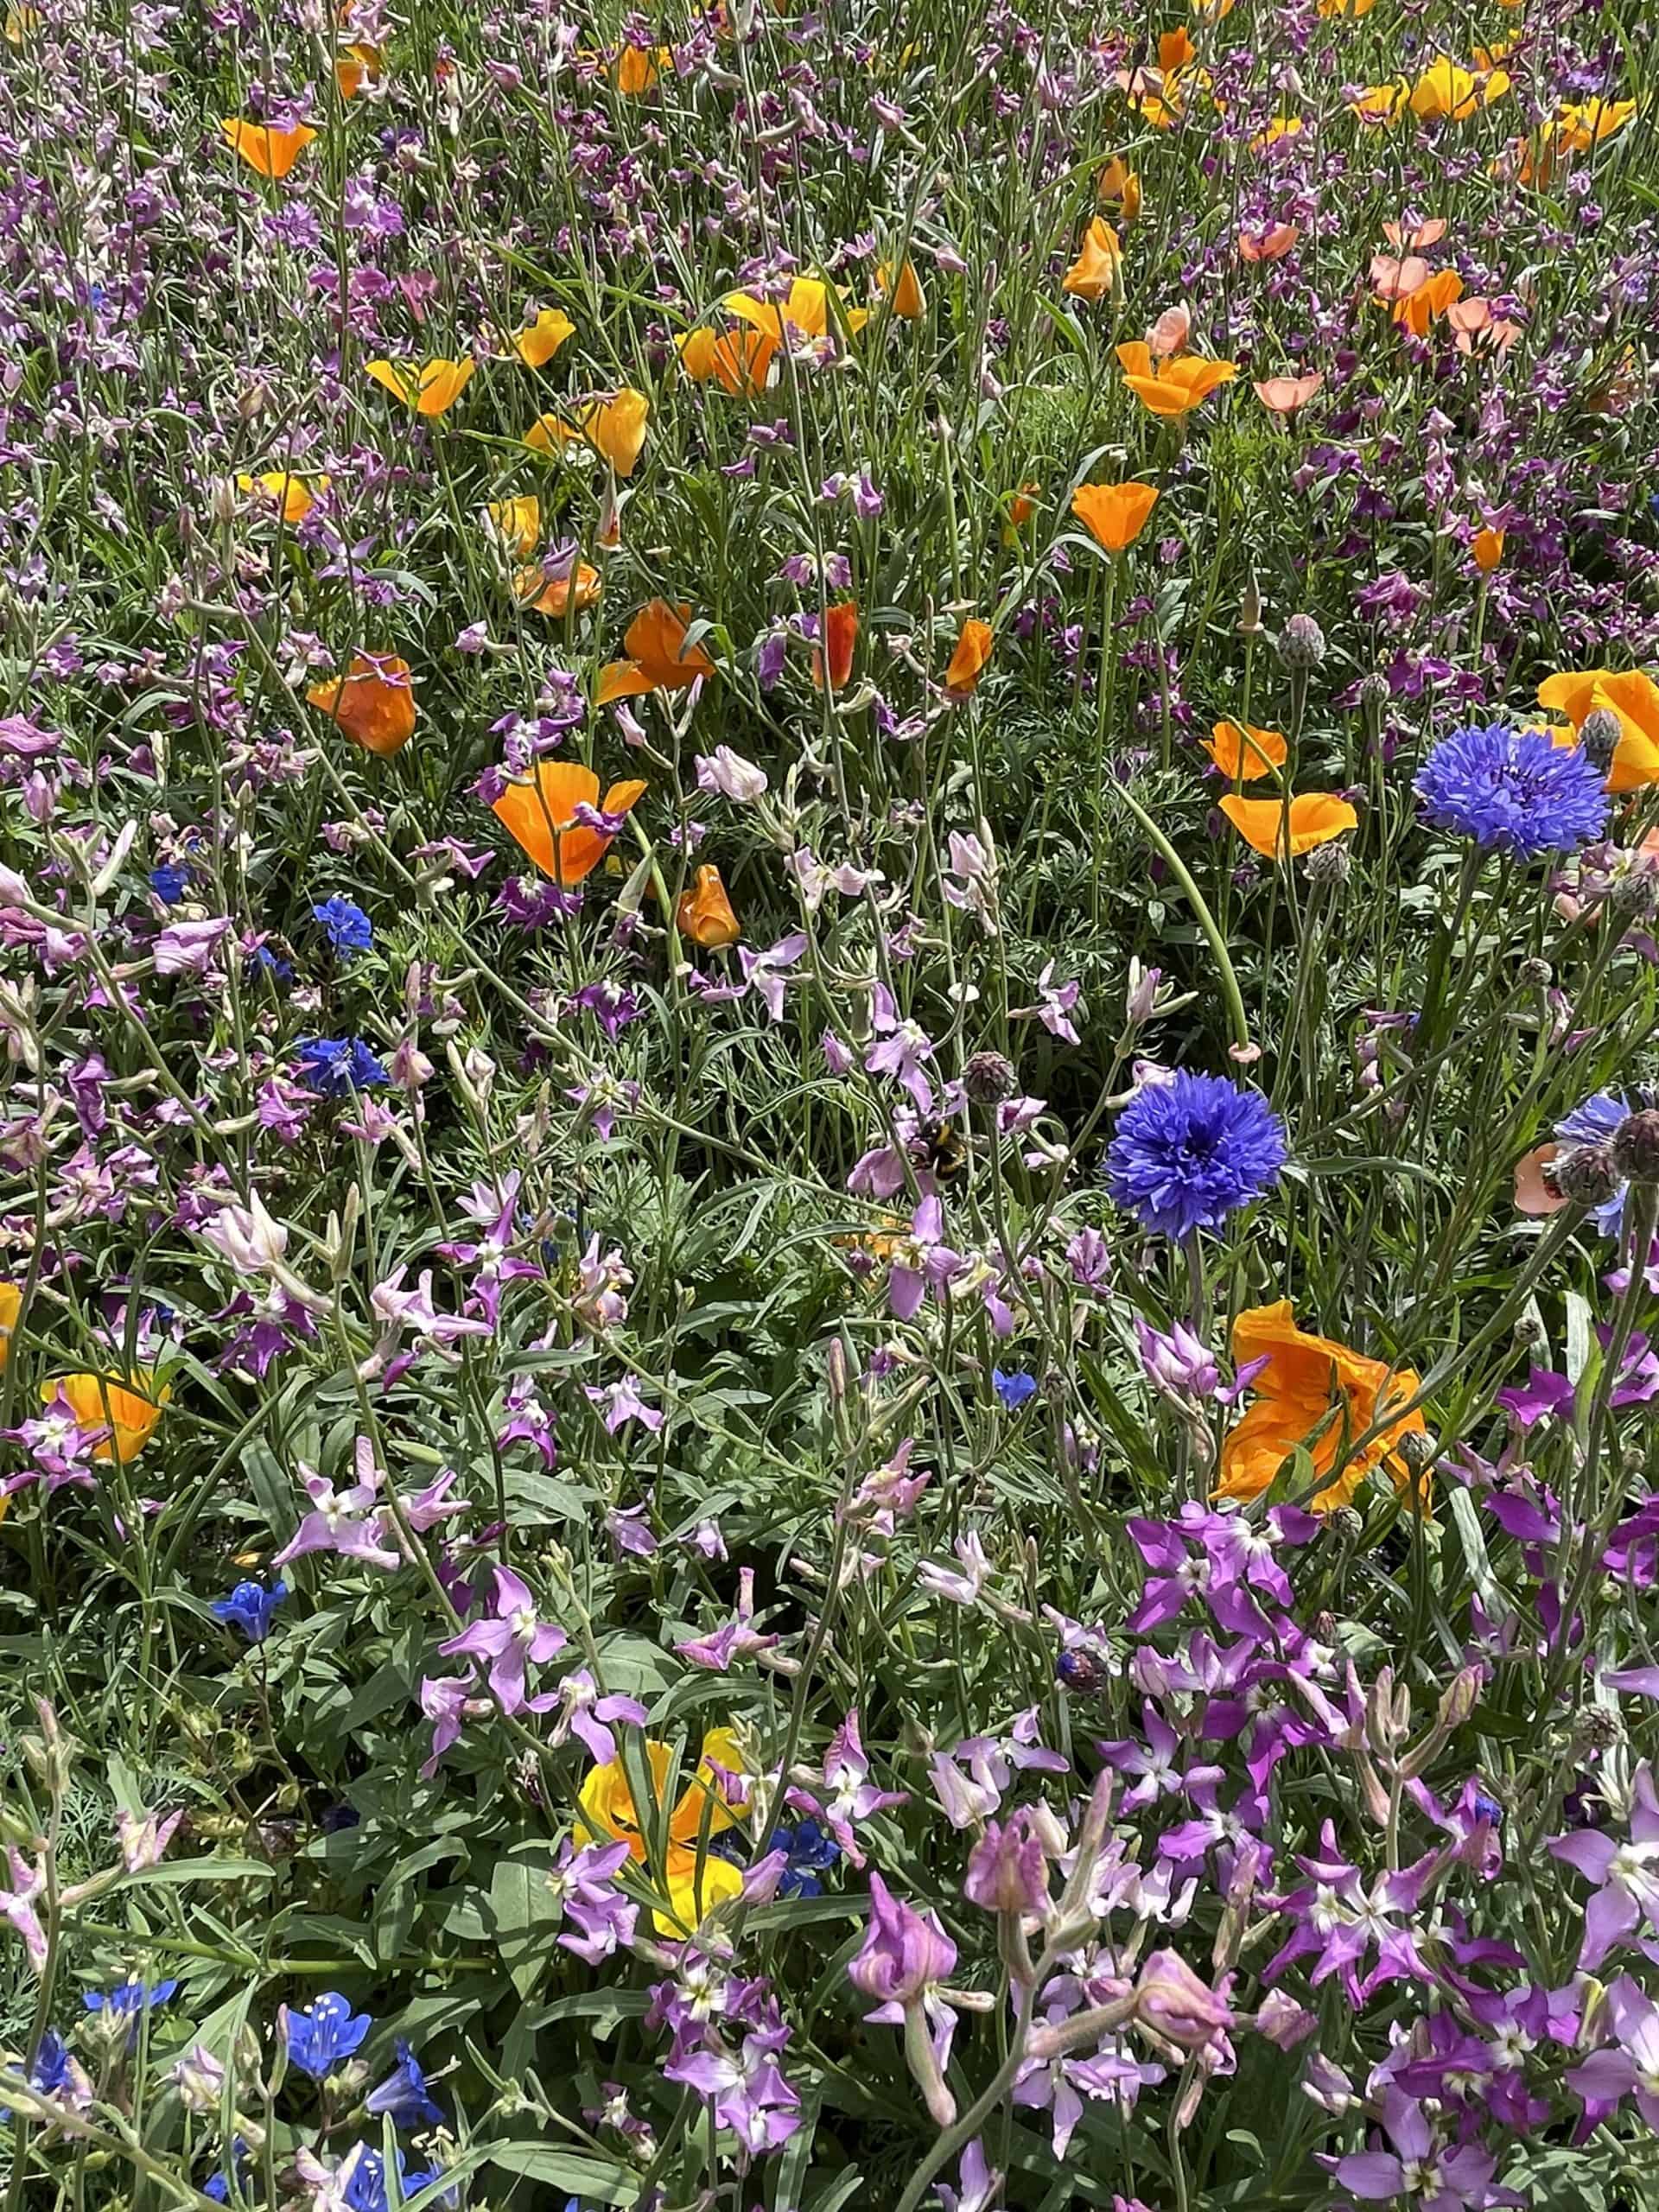 Wildflowers – Field Studies Council